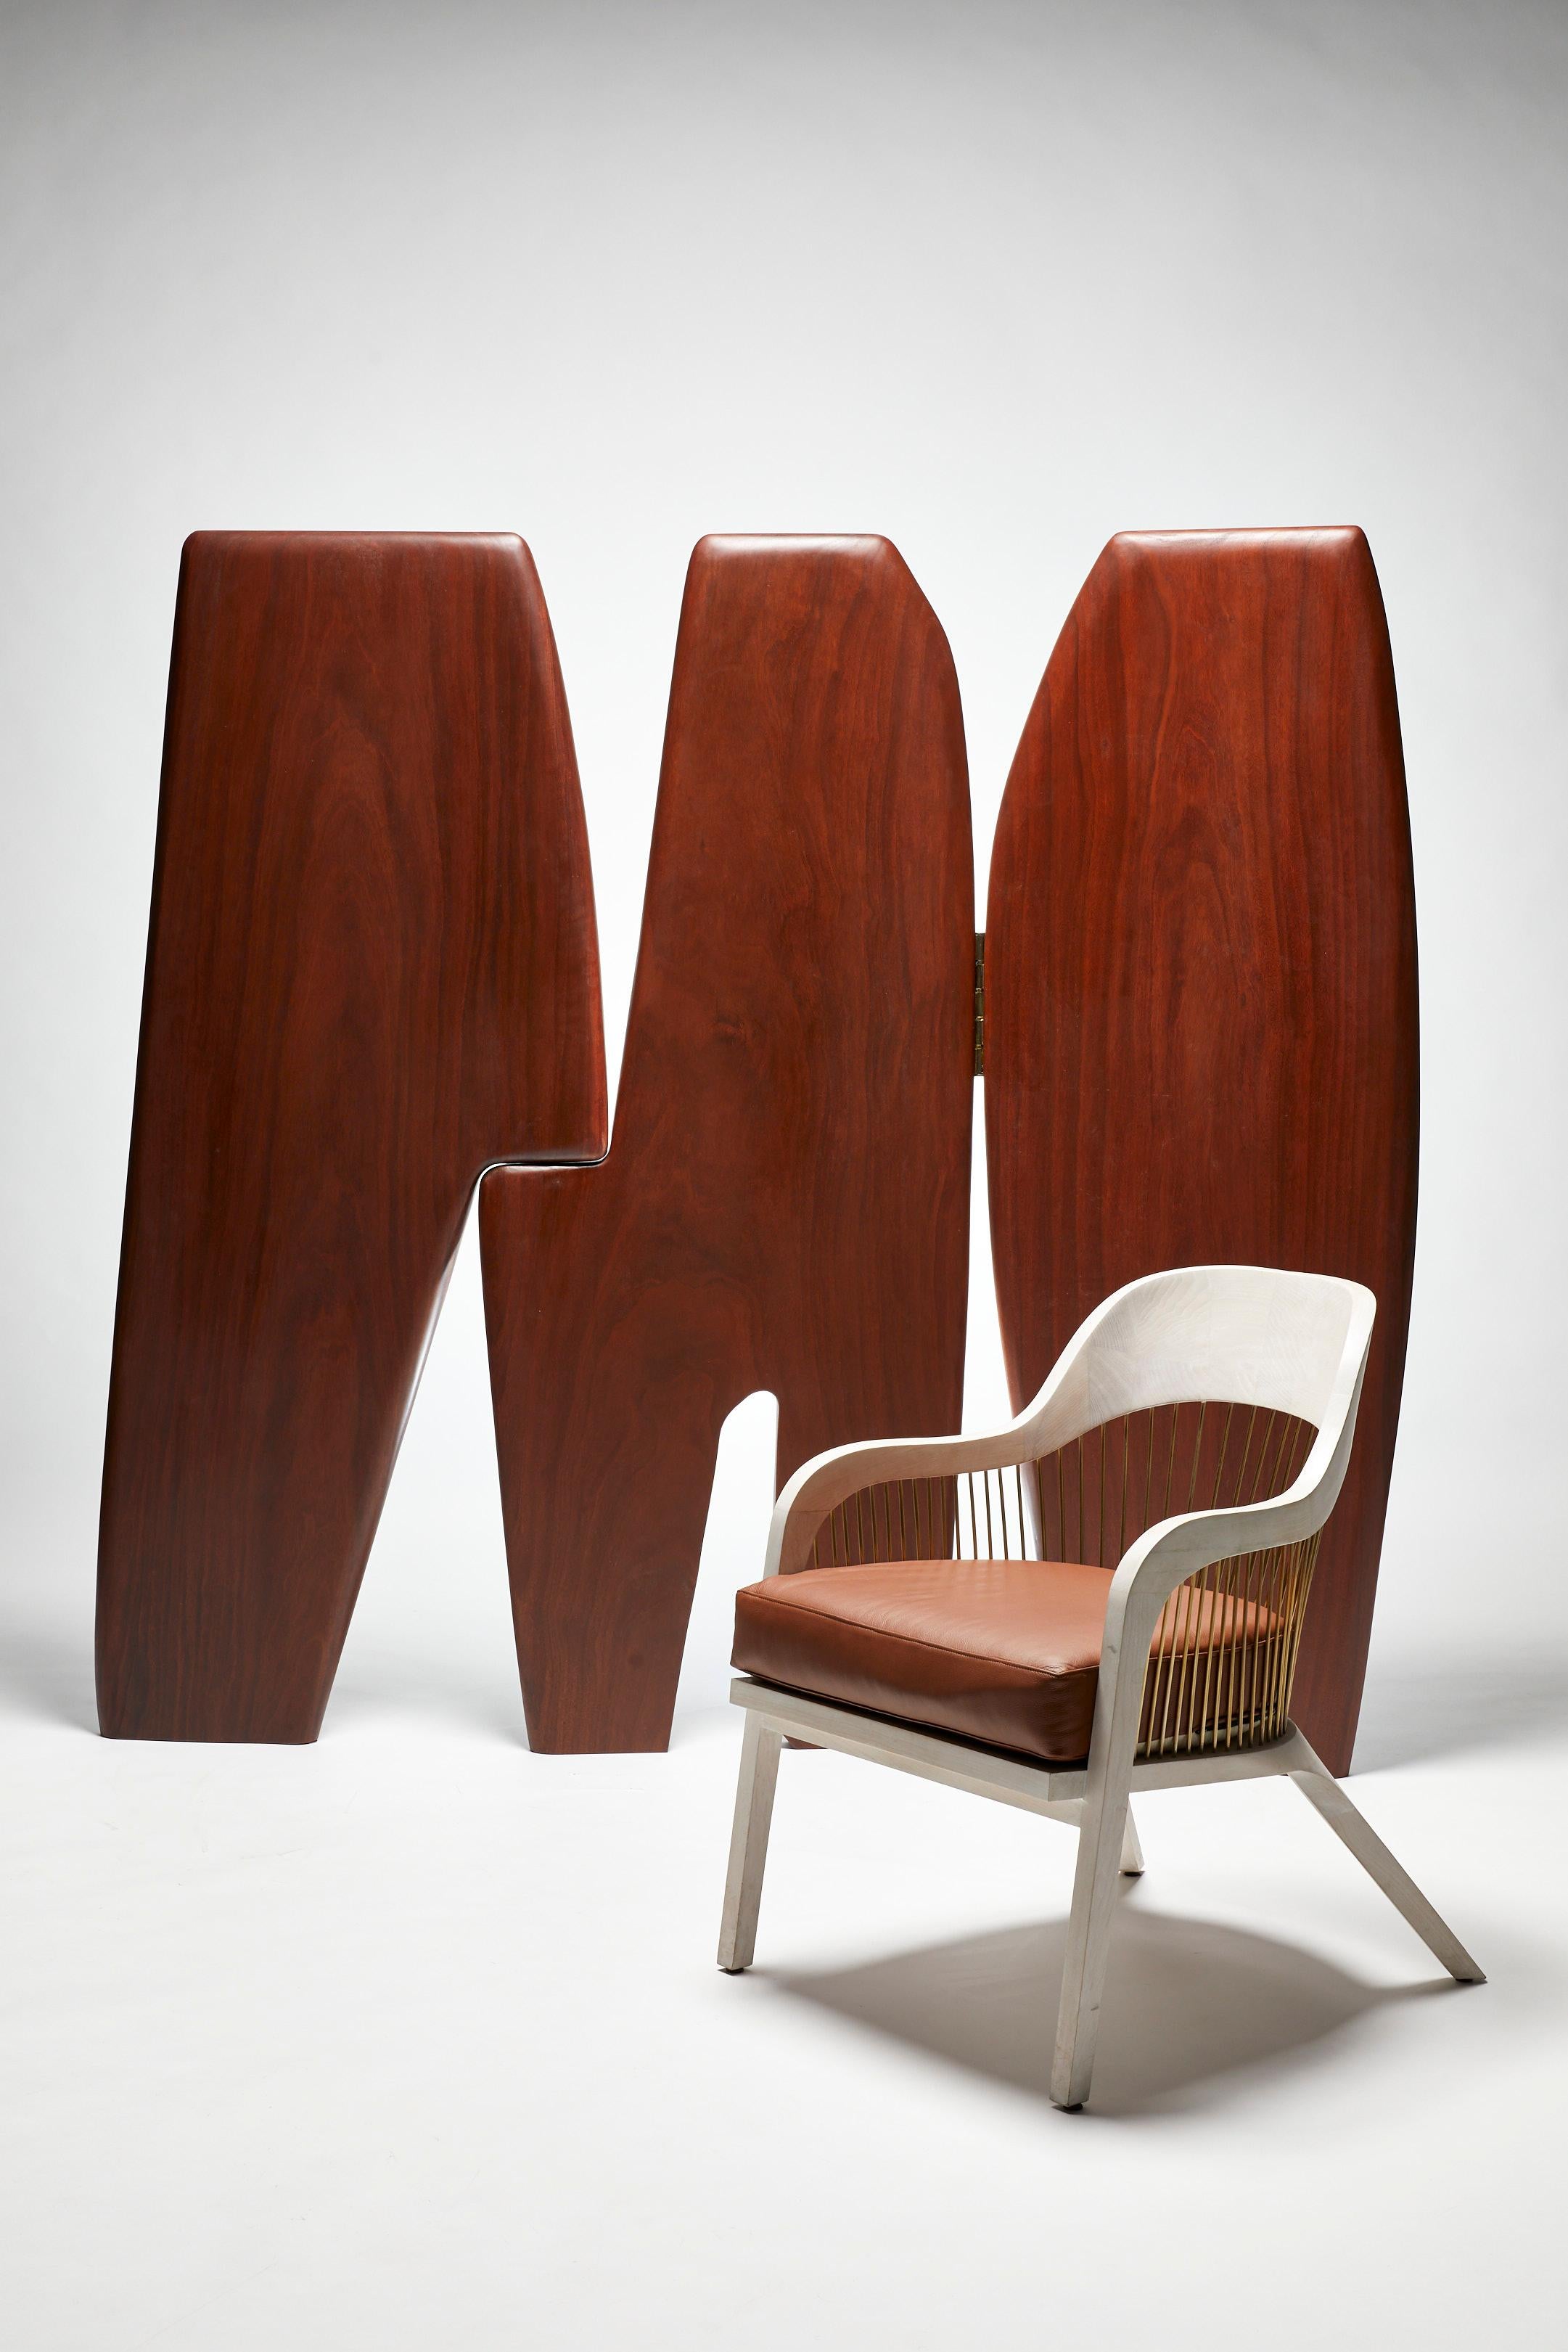 Chair, LANKA, by Reda Amalou Design, 2015 For Sale 3